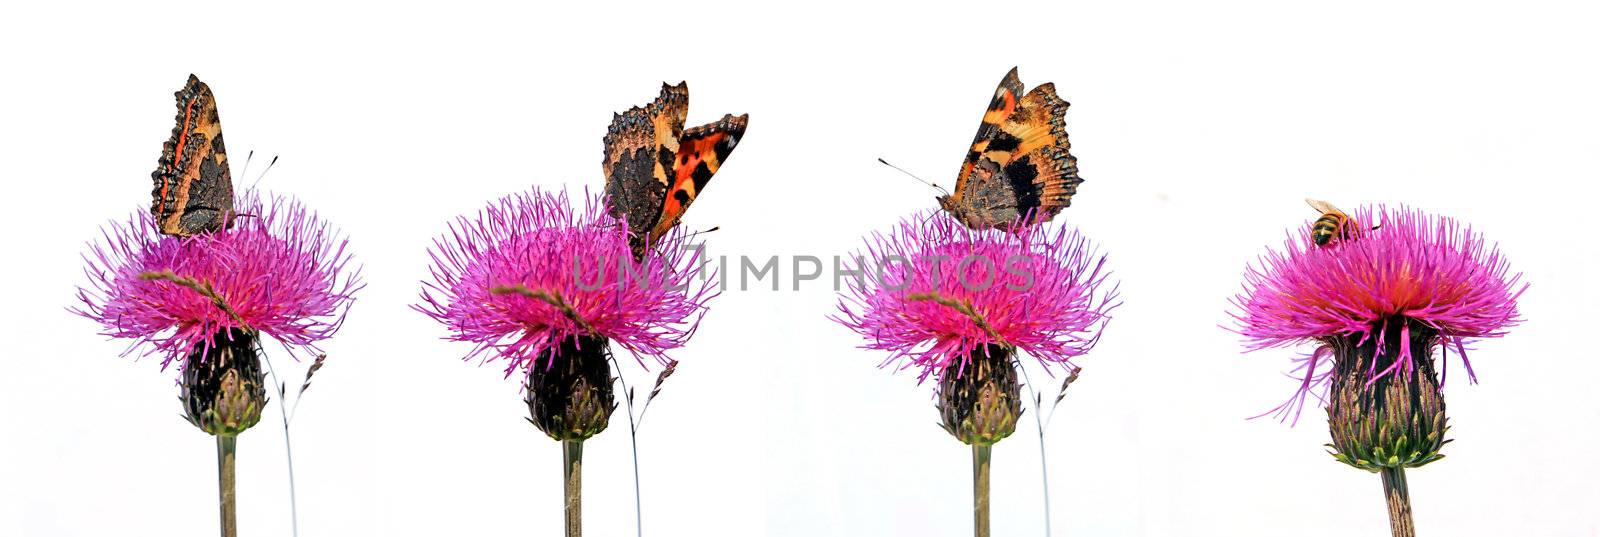 butterfly on flower by basel101658